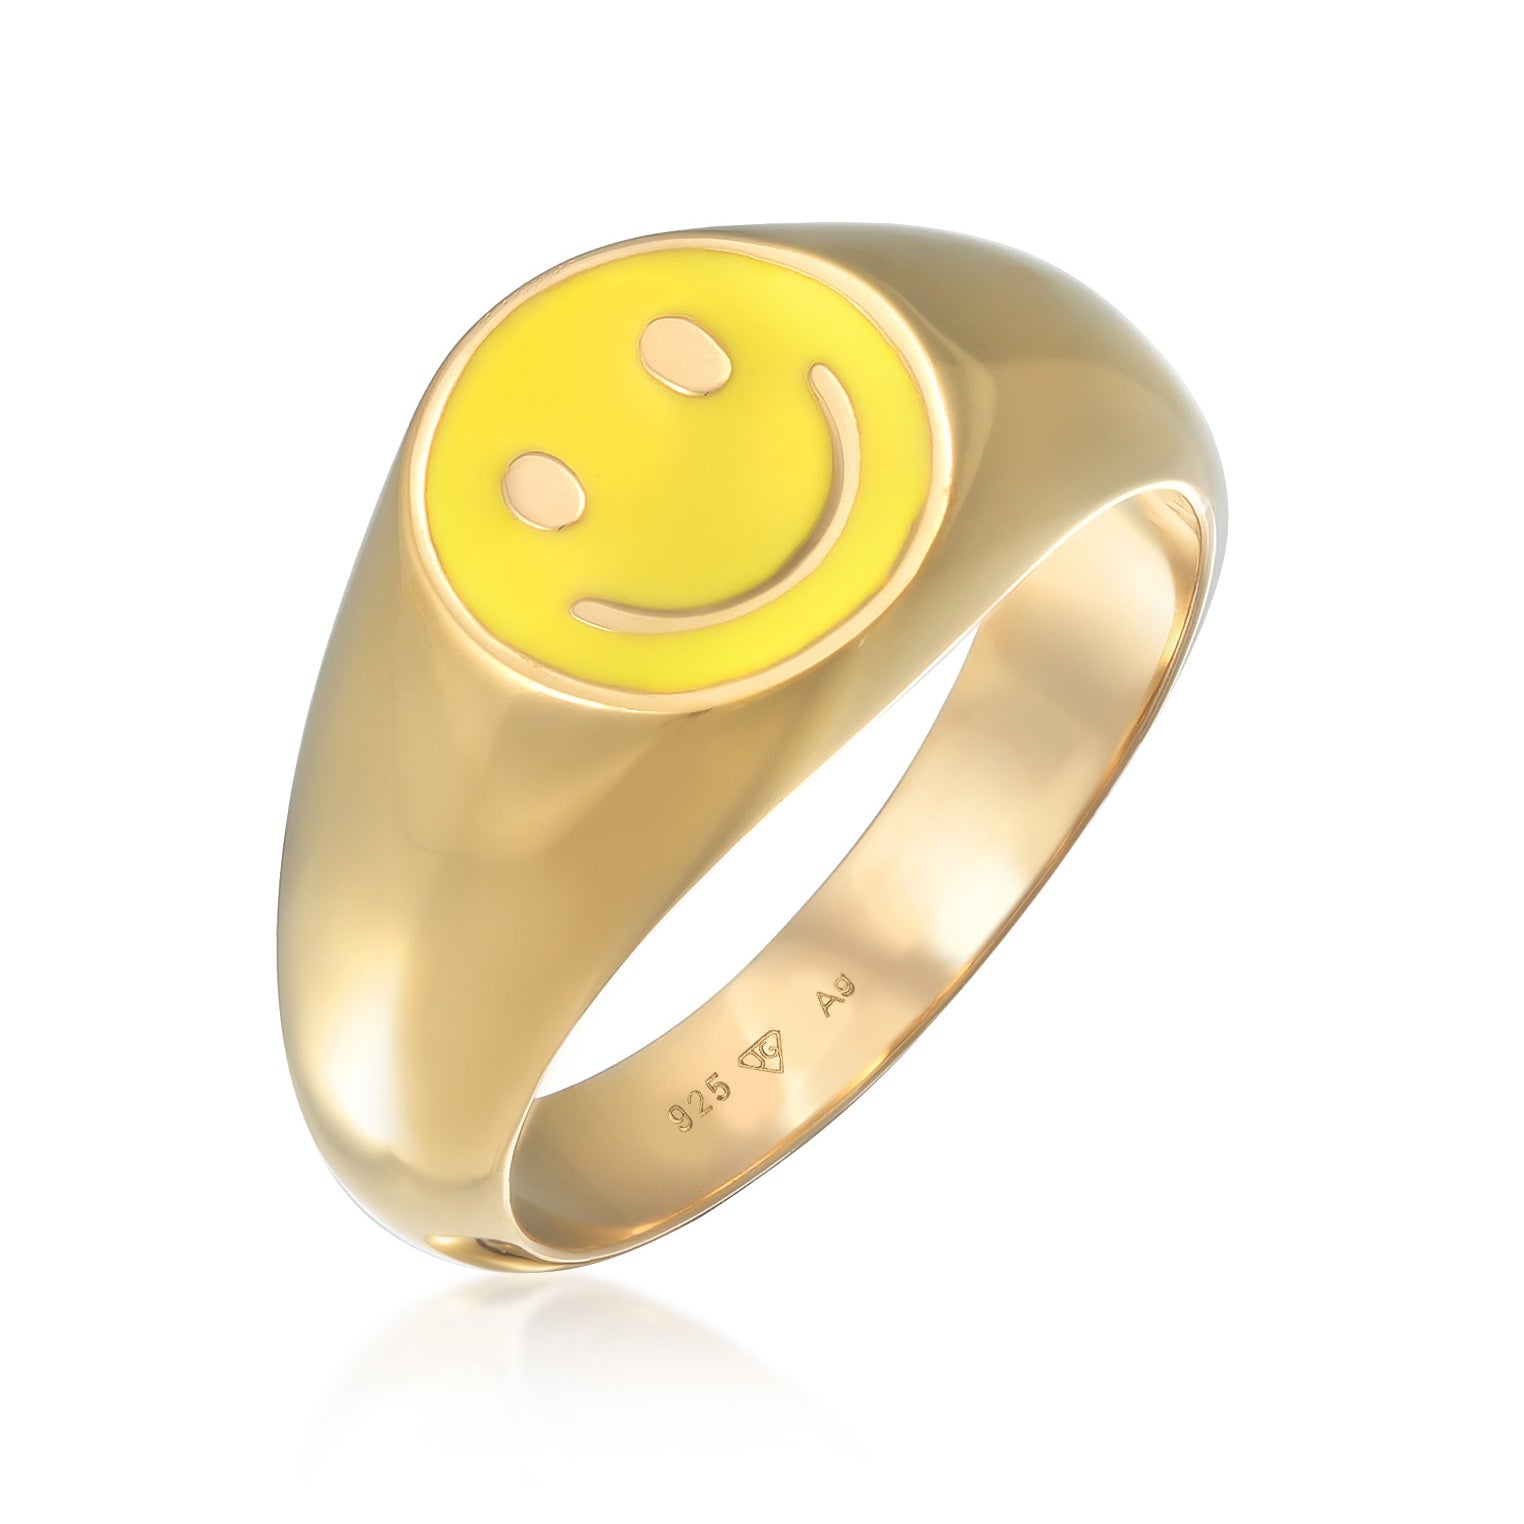 Gelb - KUZZOI | Siegelring mit Smiling Face | Emaille (Gelb) | 925er Sterling Silber Vergoldet